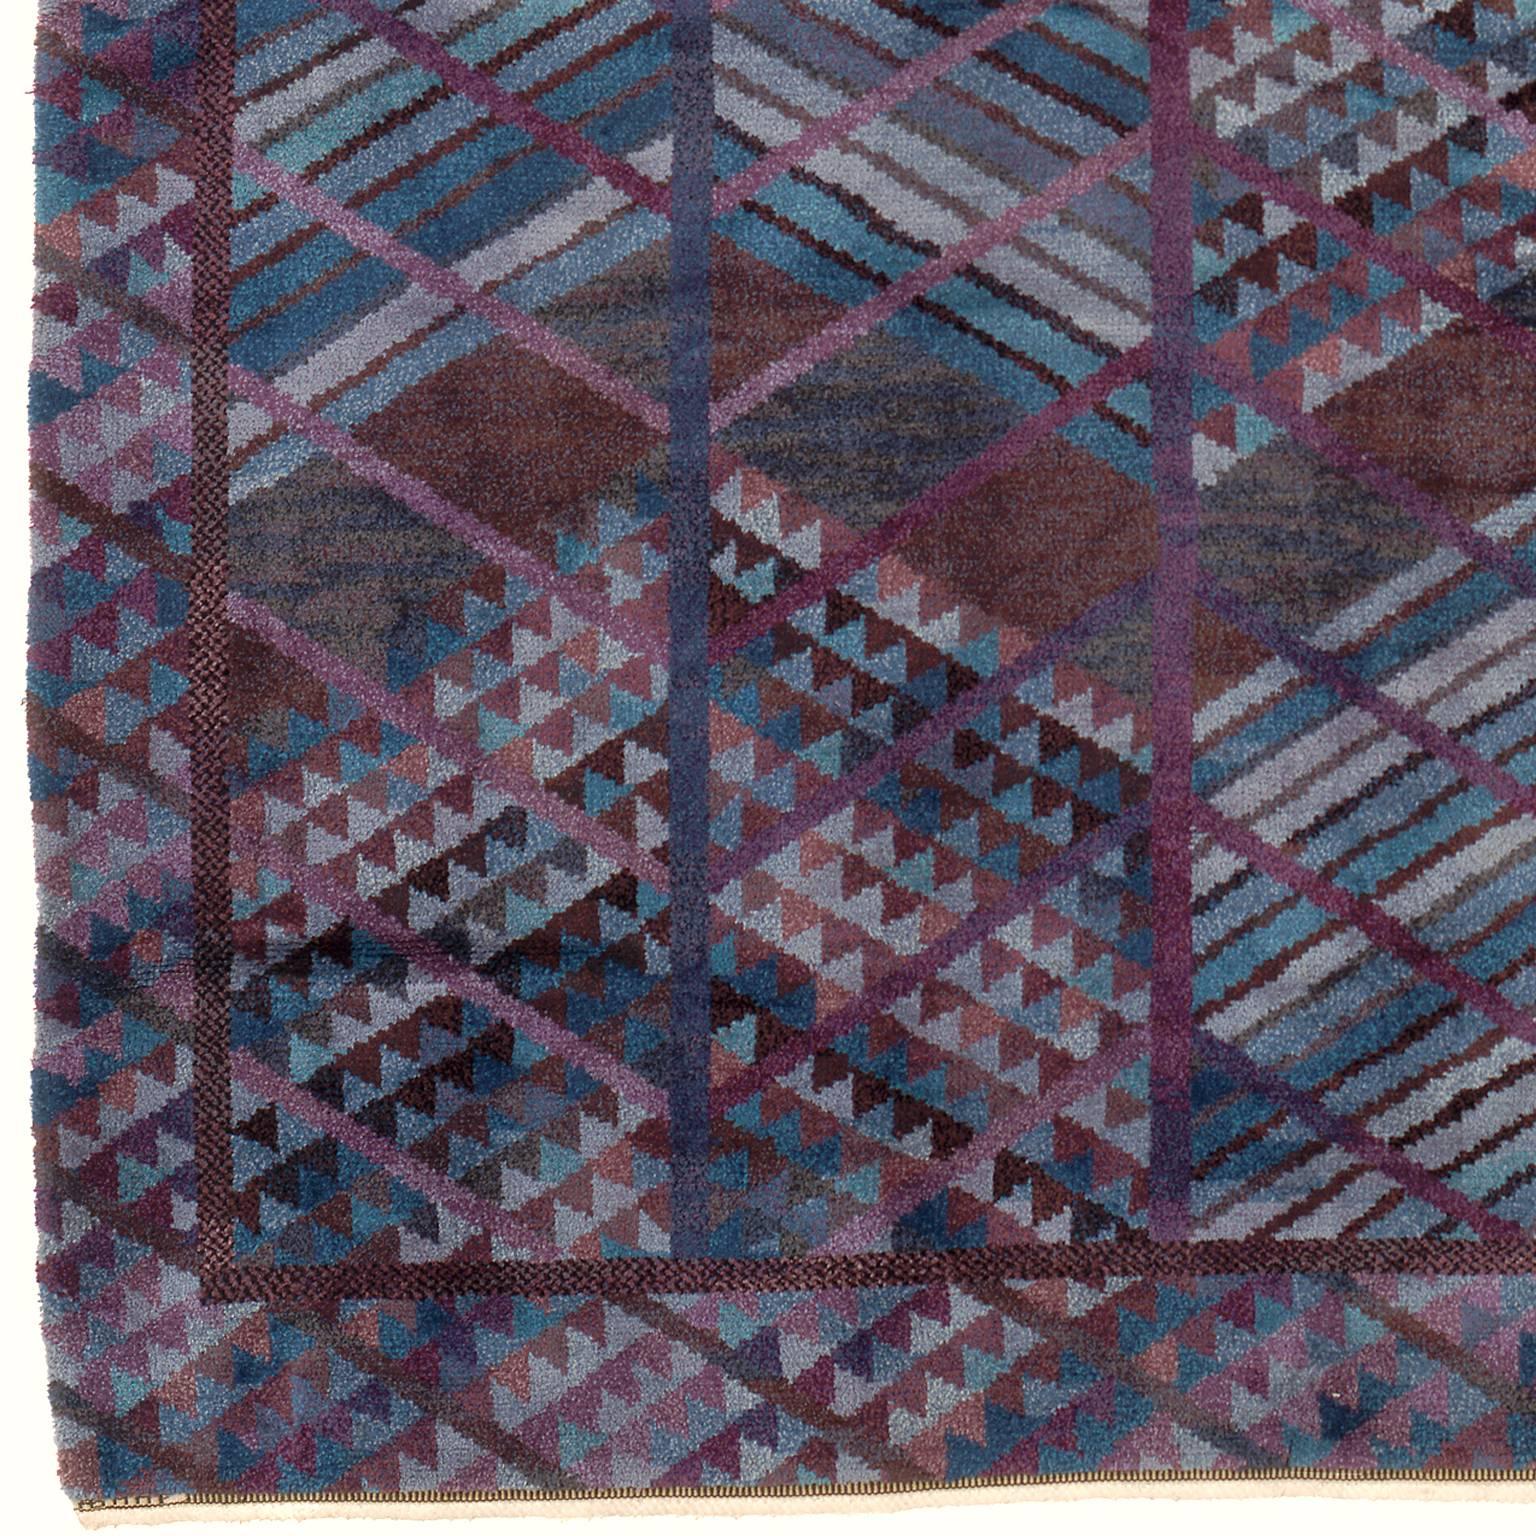 Hand-Woven Swedish Carpet by Marianne Richter, 